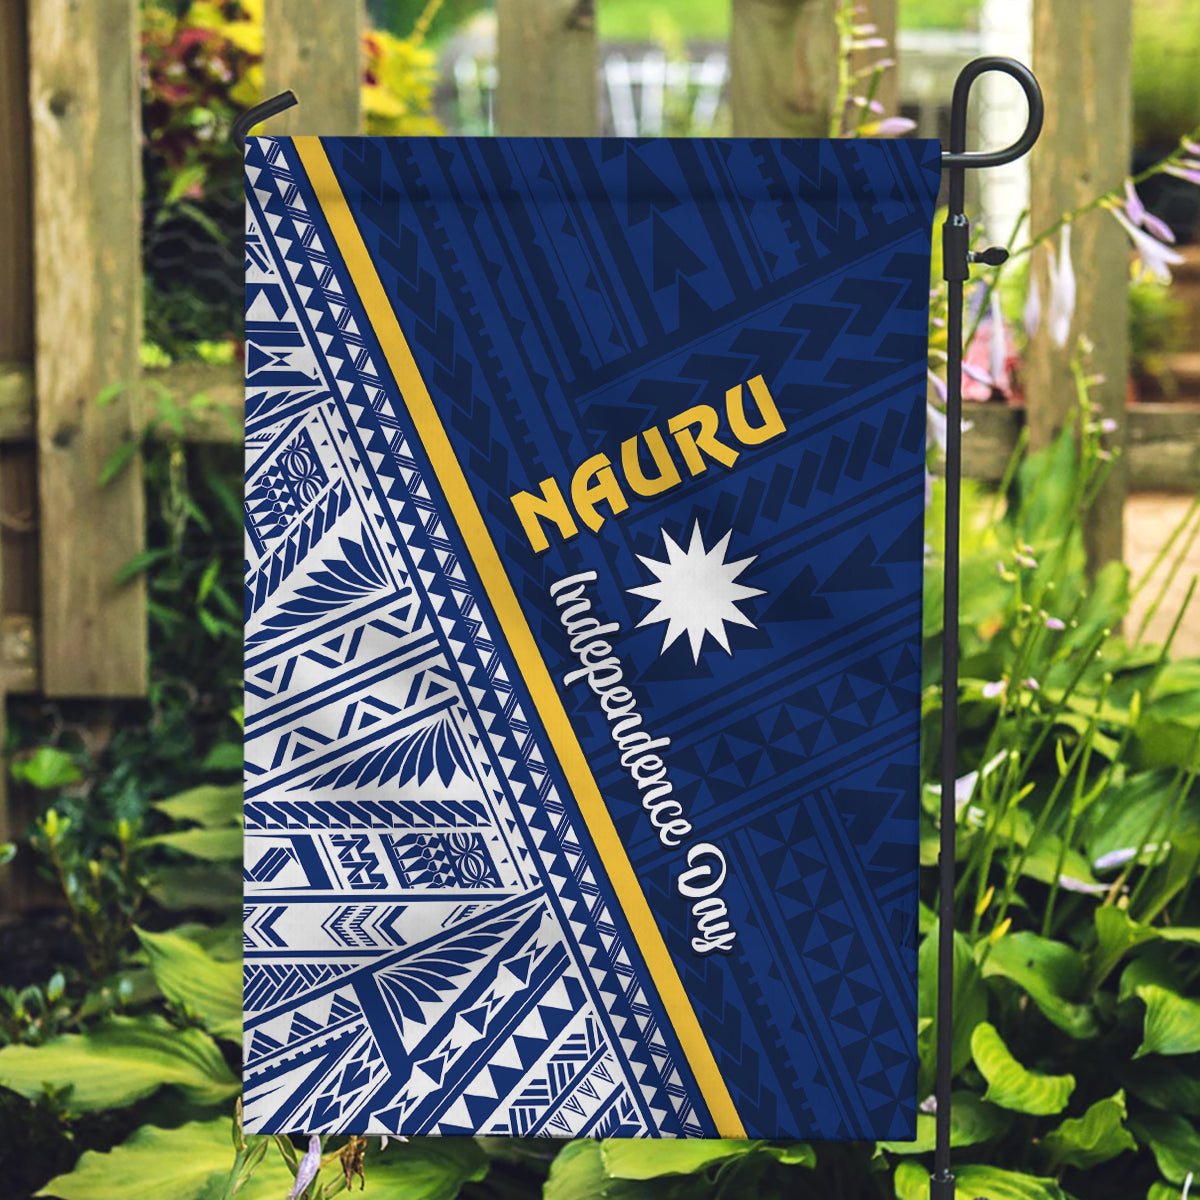 Nauru Independence Day Garden Flag Repubrikin Naoero Gods Will First LT01 Garden Flag Blue - Polynesian Pride